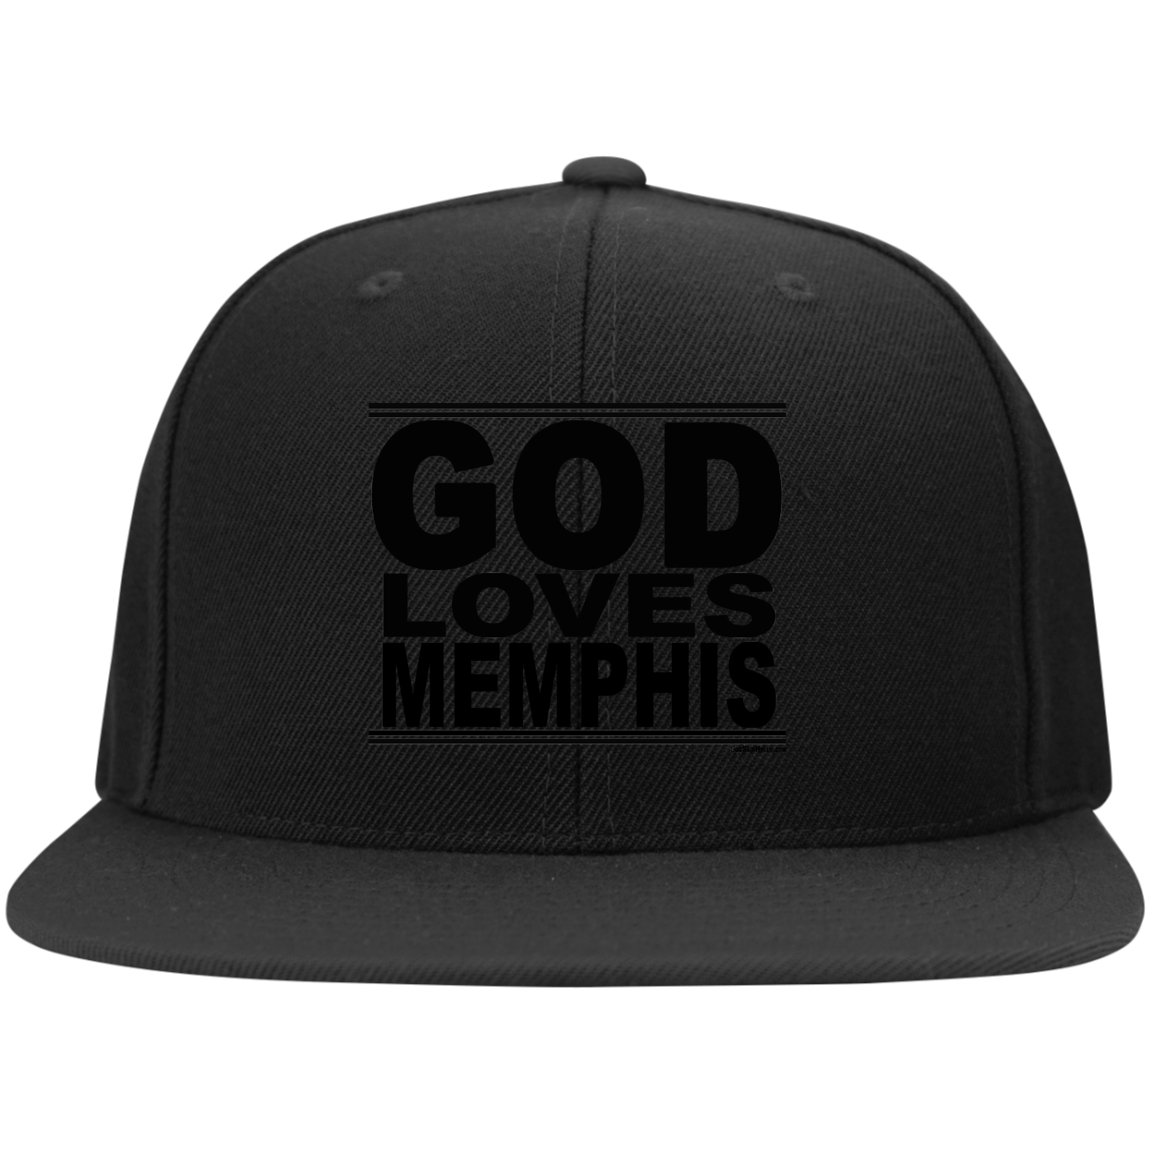 #GodLovesMemphis - Snapback Hat